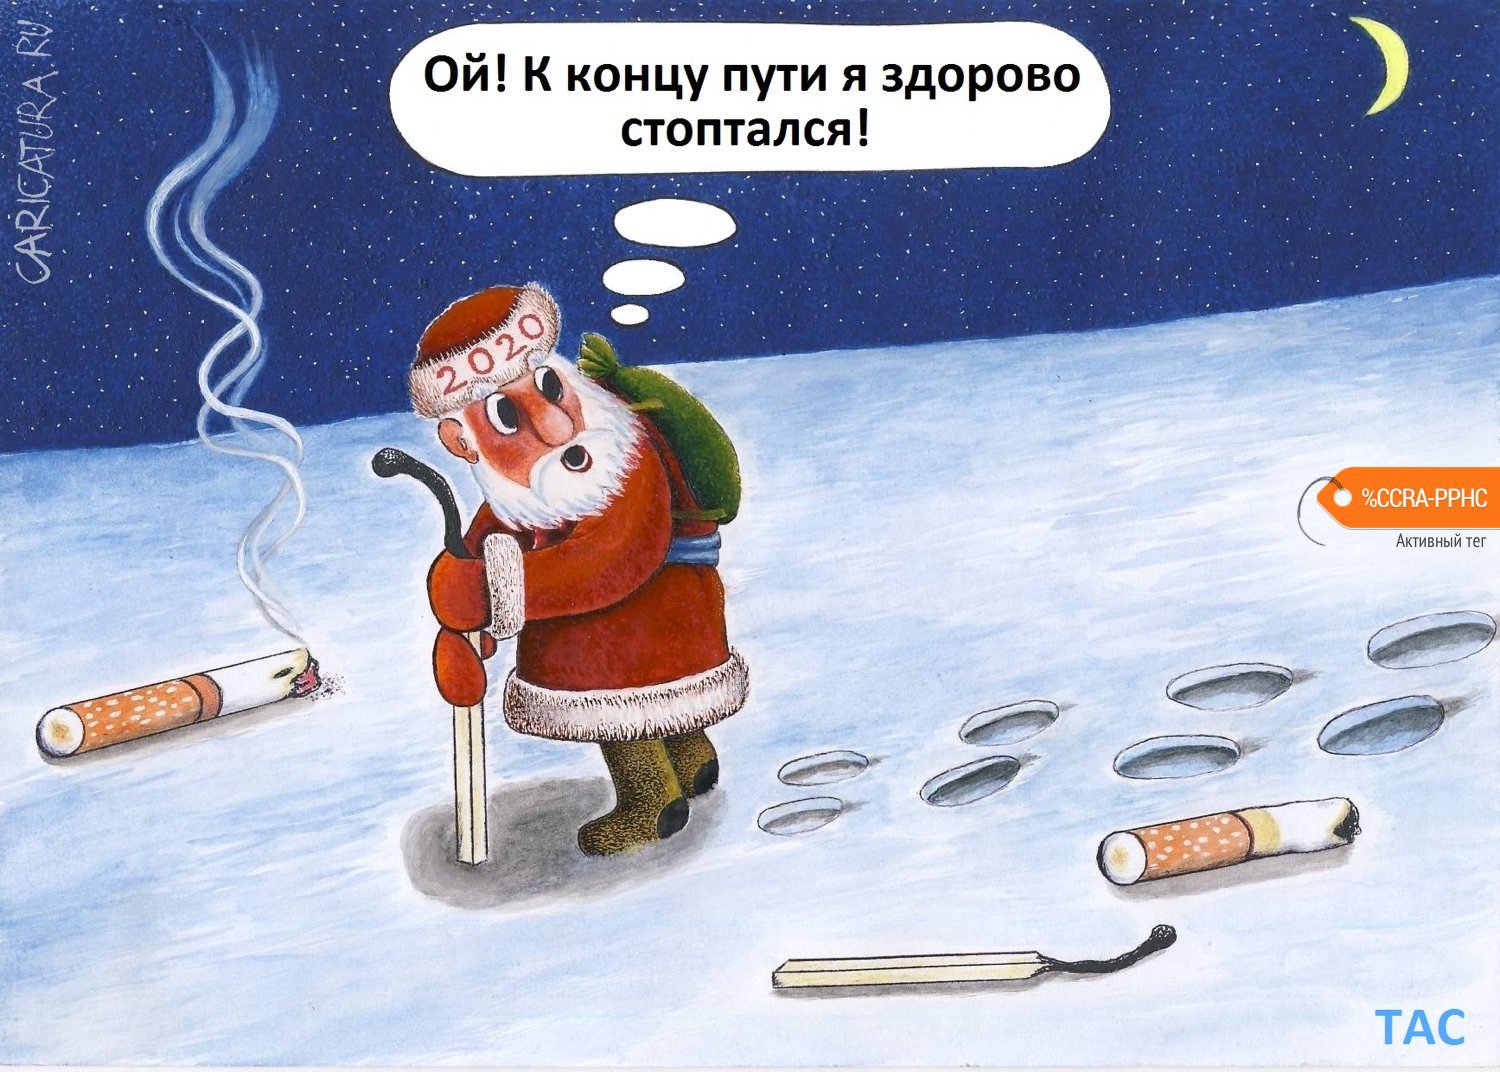 Карикатура "Стоптался старый", Александр Троицкий